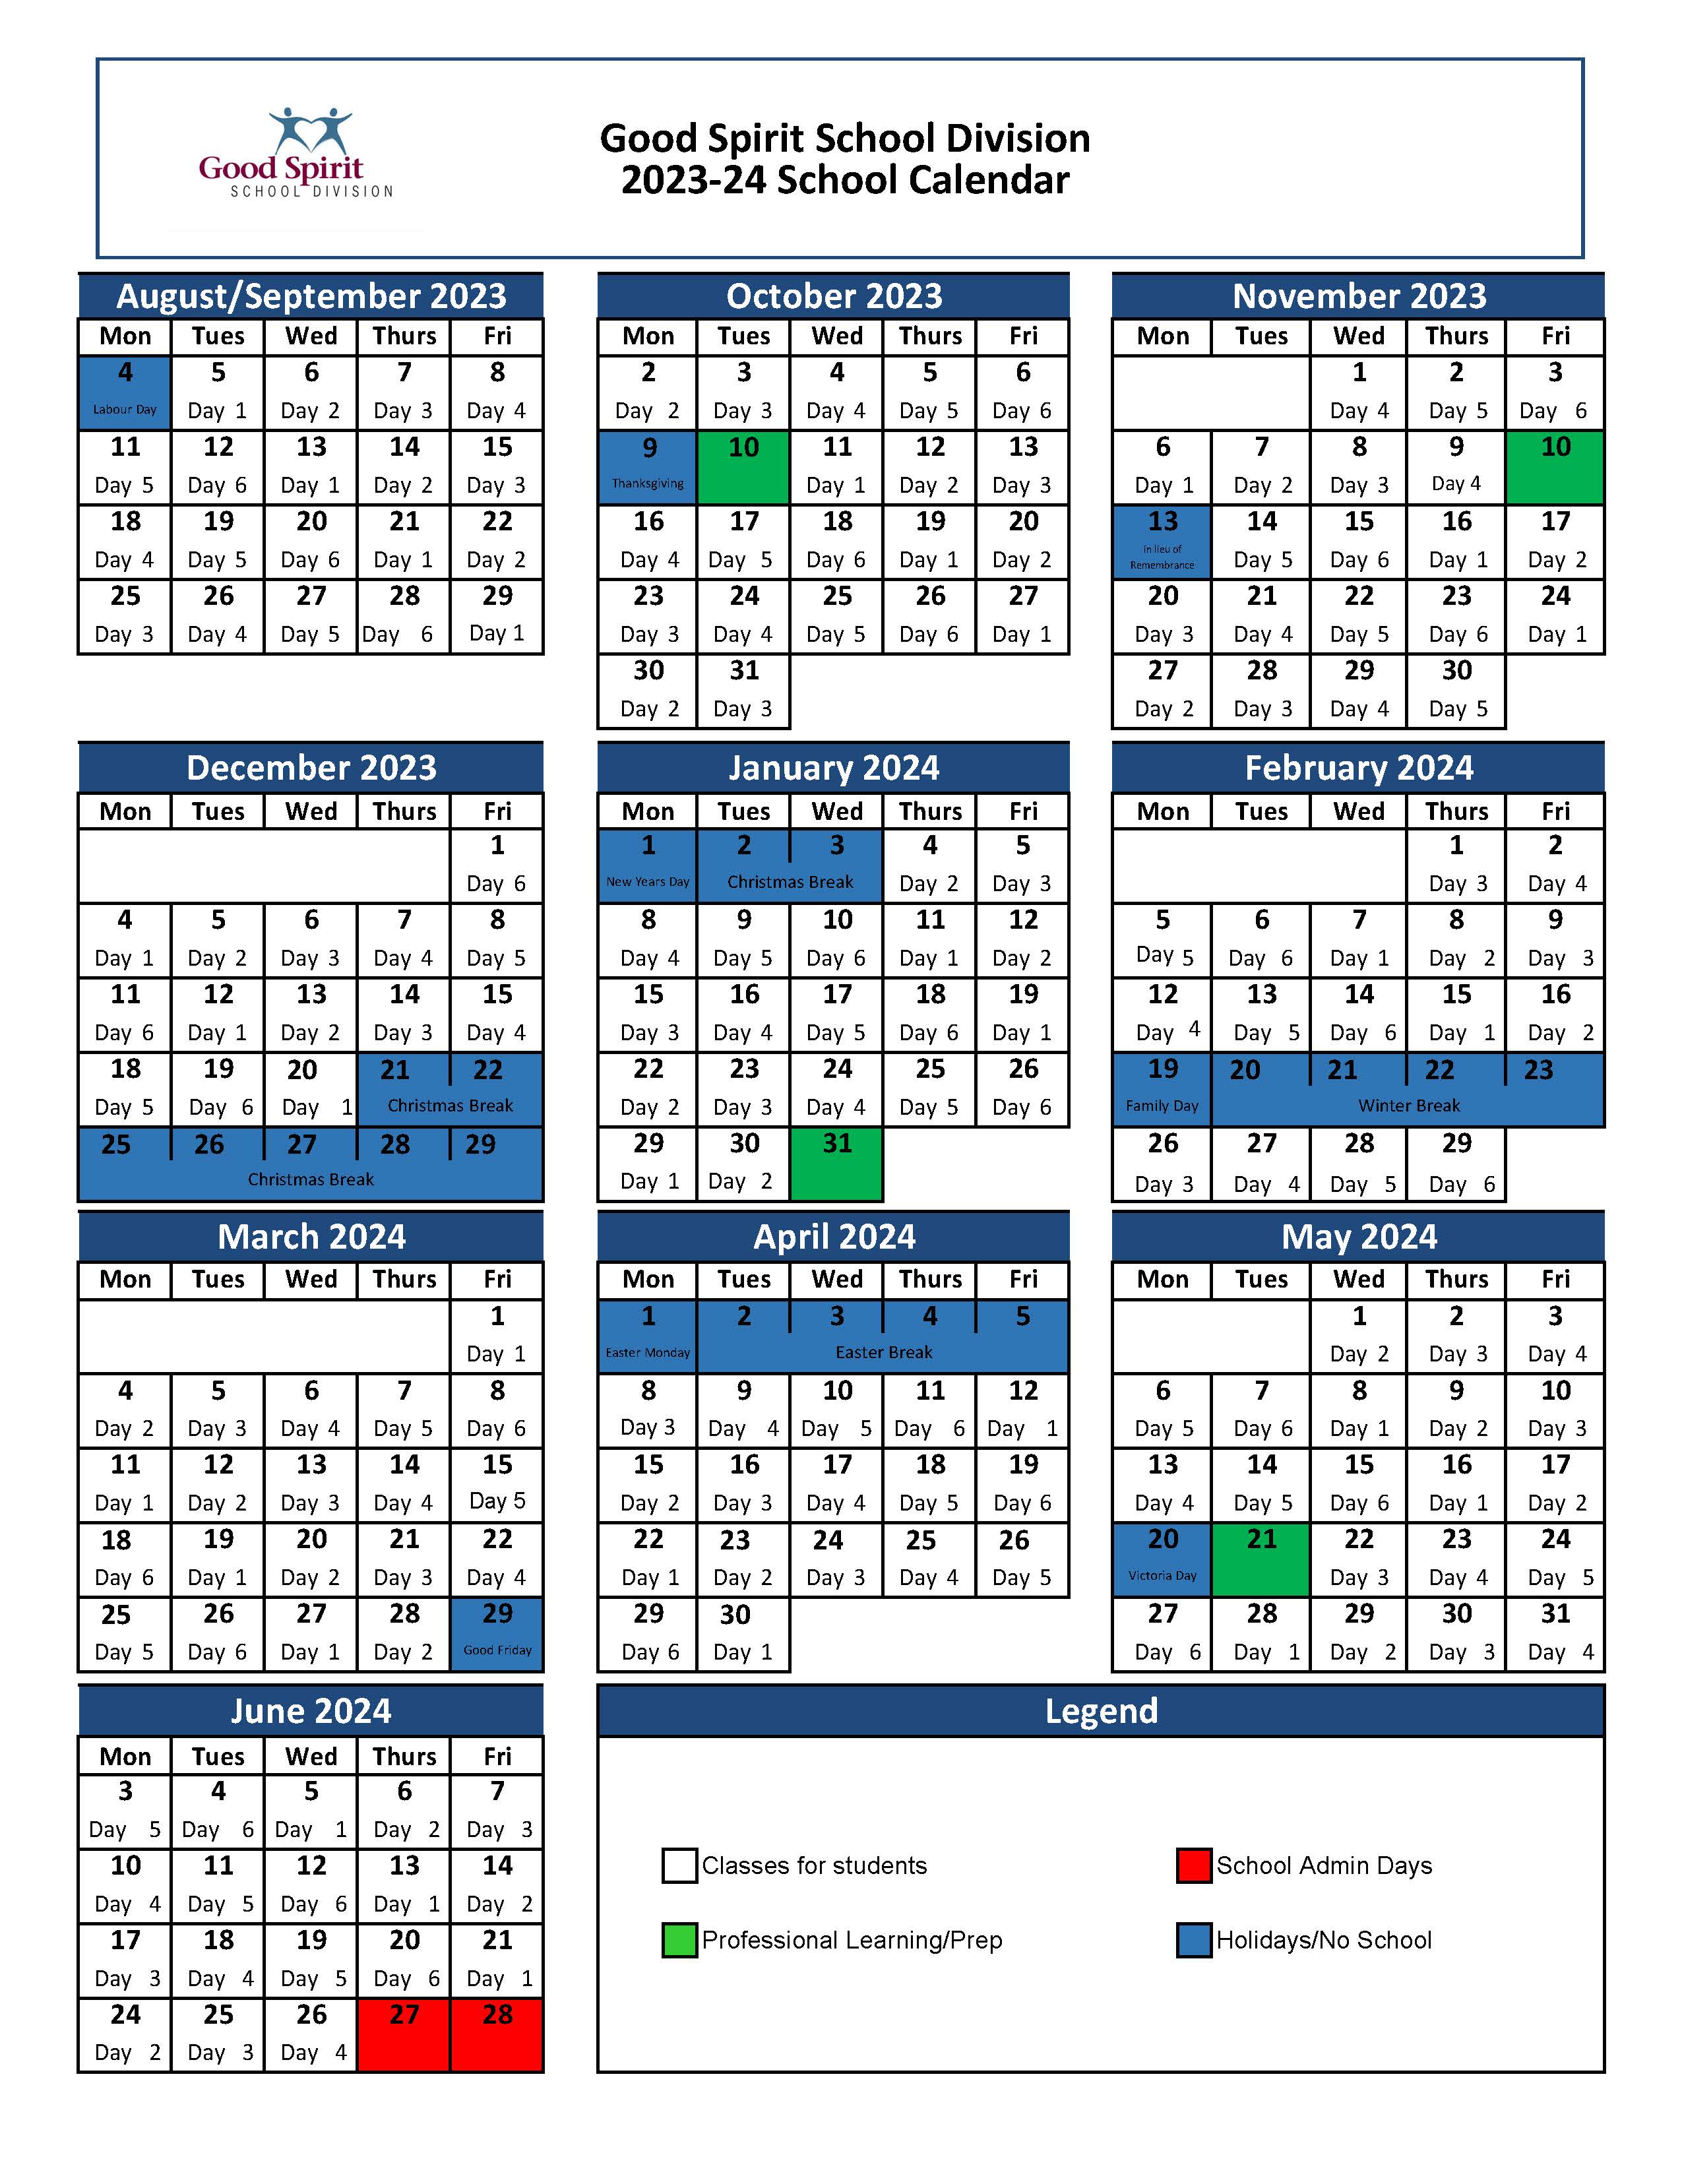 School Year Calendars Good Spirit School Division